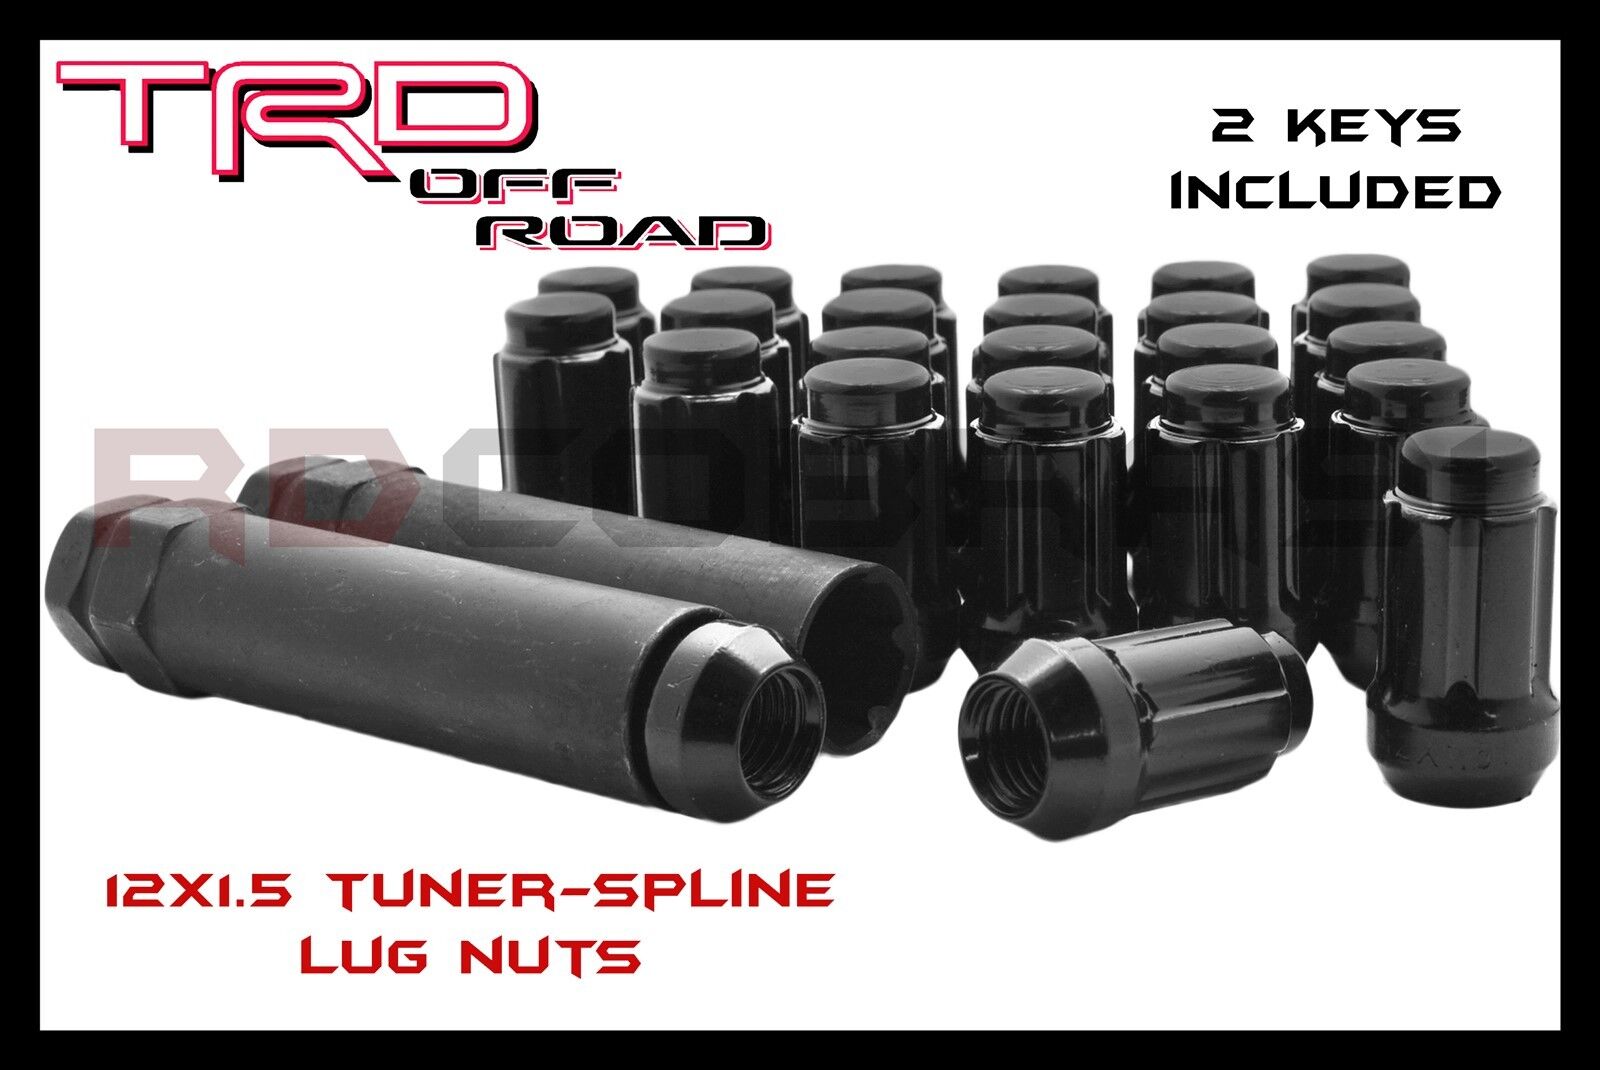 24 Black 6 Spline Lug Nuts 12x1.5 +2 Keys Toyota Tacoma Tundra FJ Cruiser & More